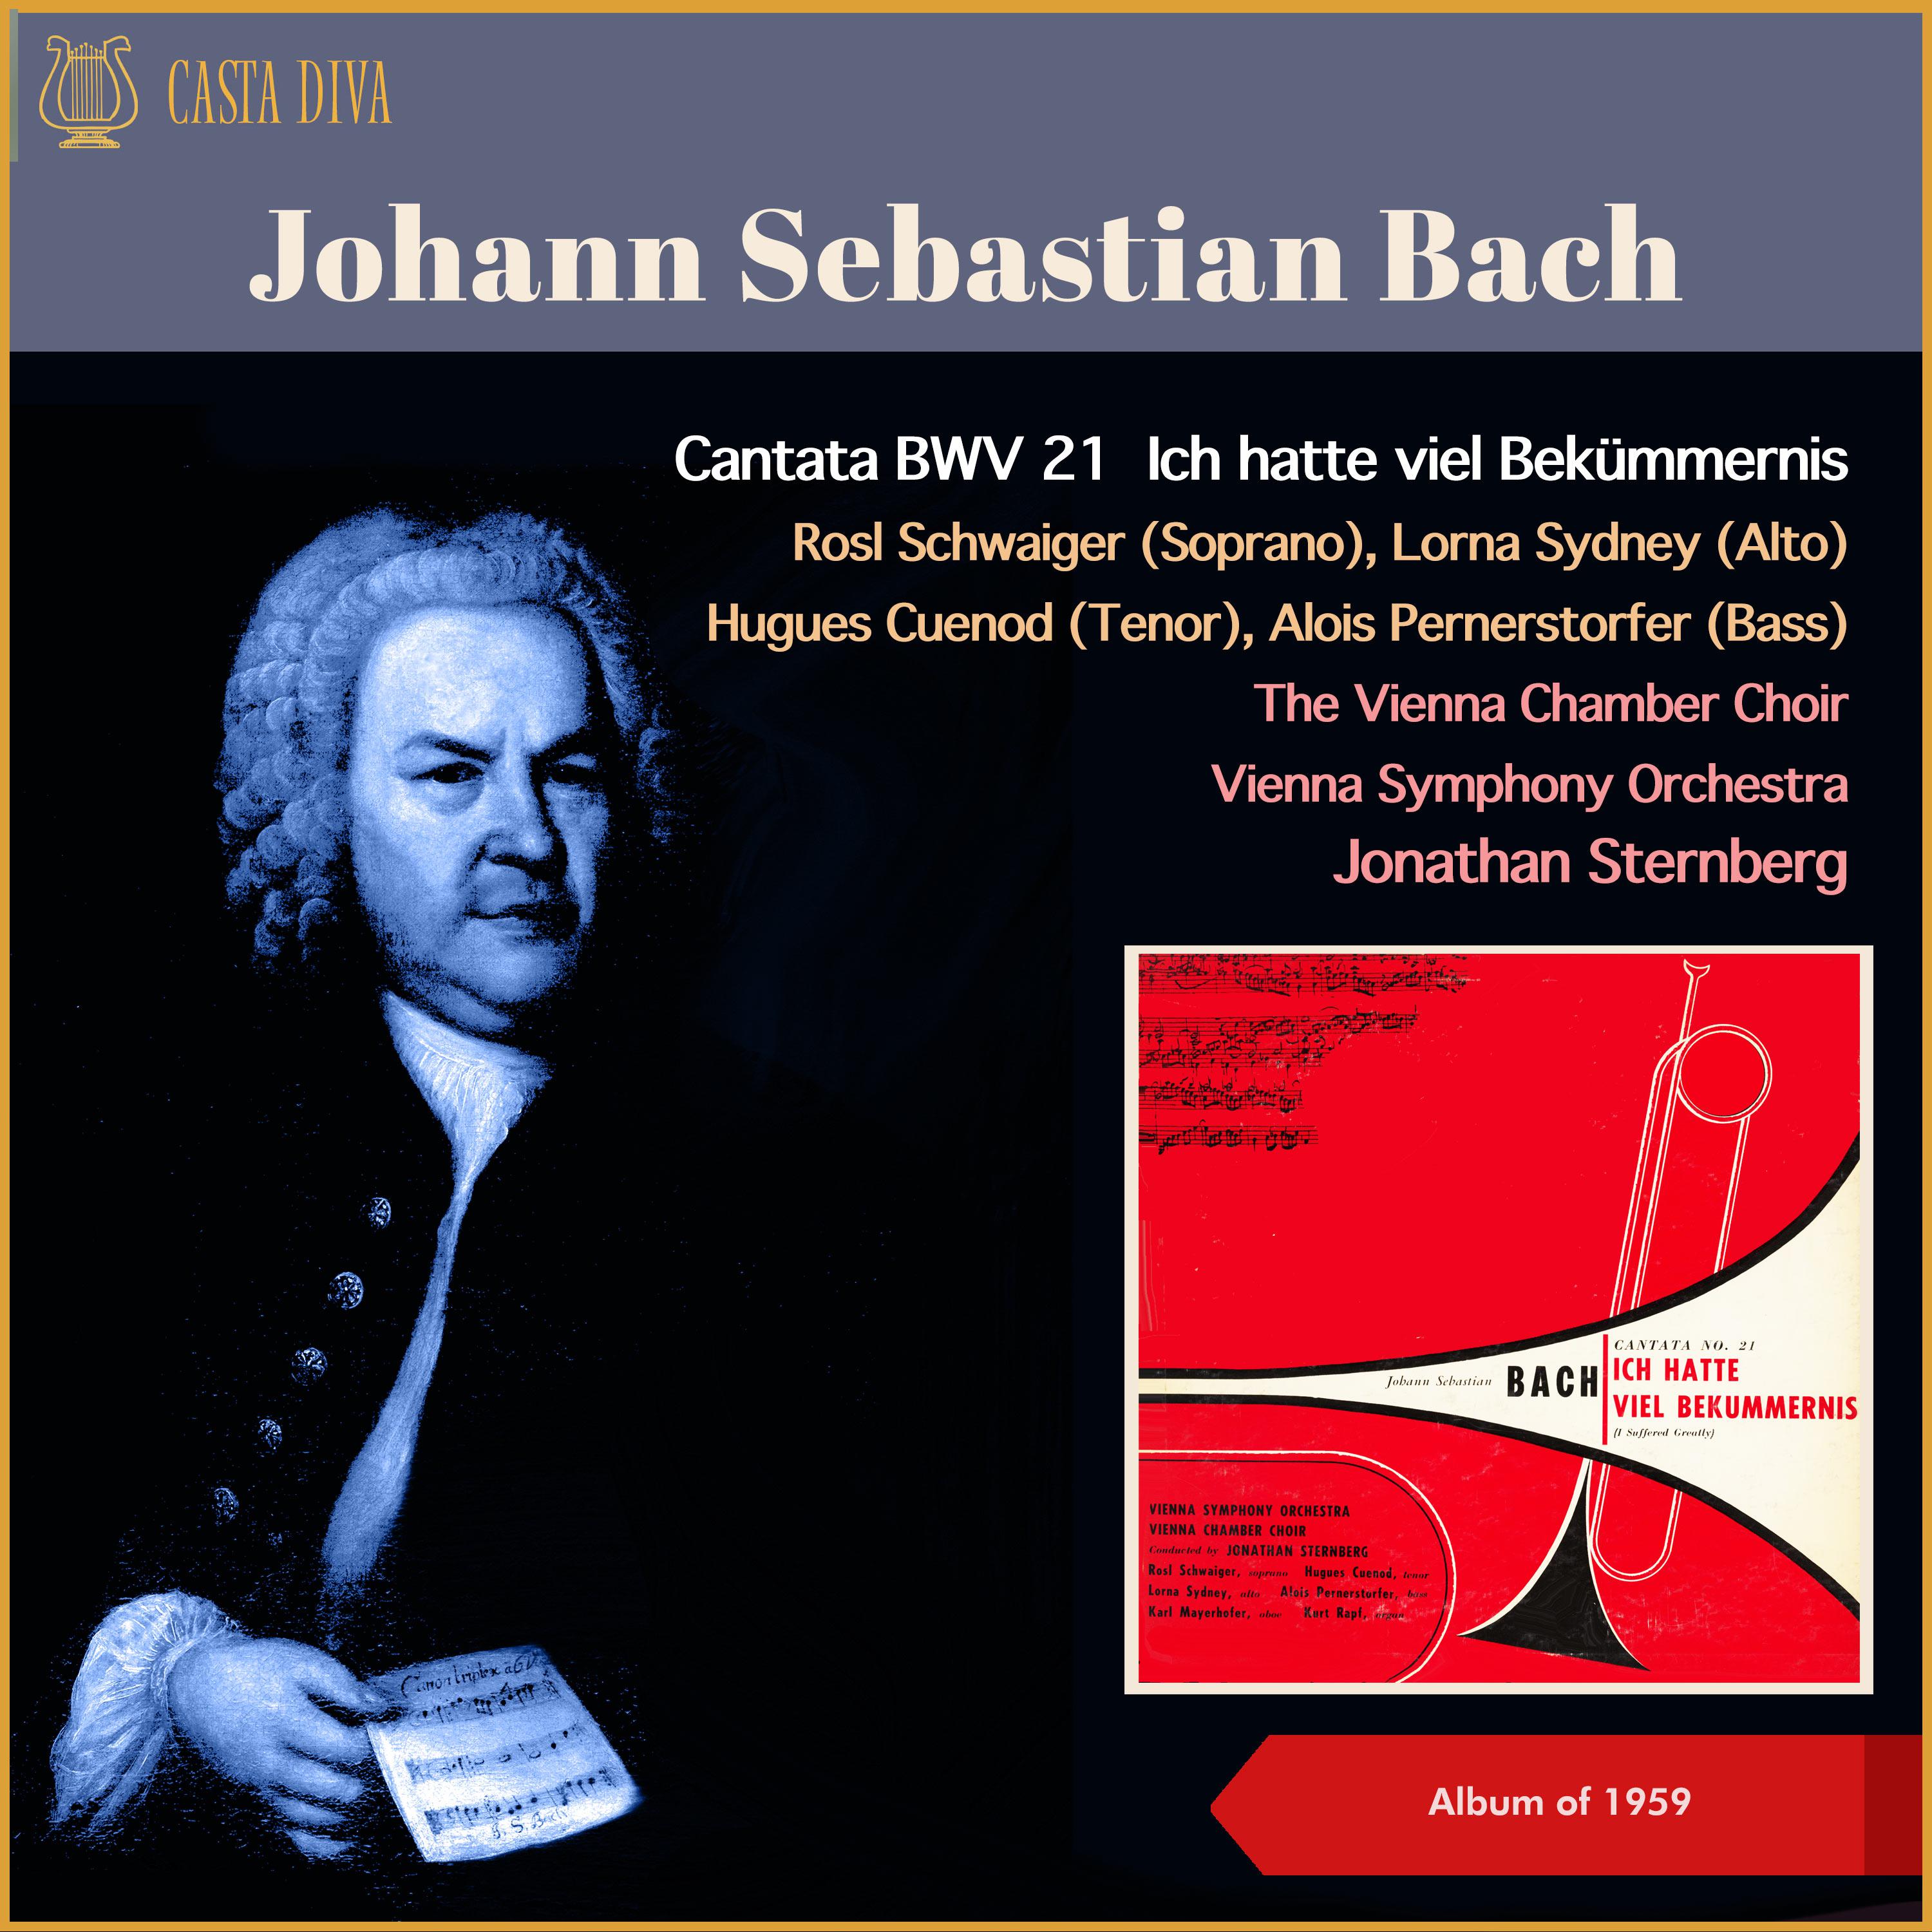 Jonathan Sternberg - Cantata BWV 21 ‚Ich hatte viel Bekümmernis' - II. Coro:Ich hatte viel Bekümmernis